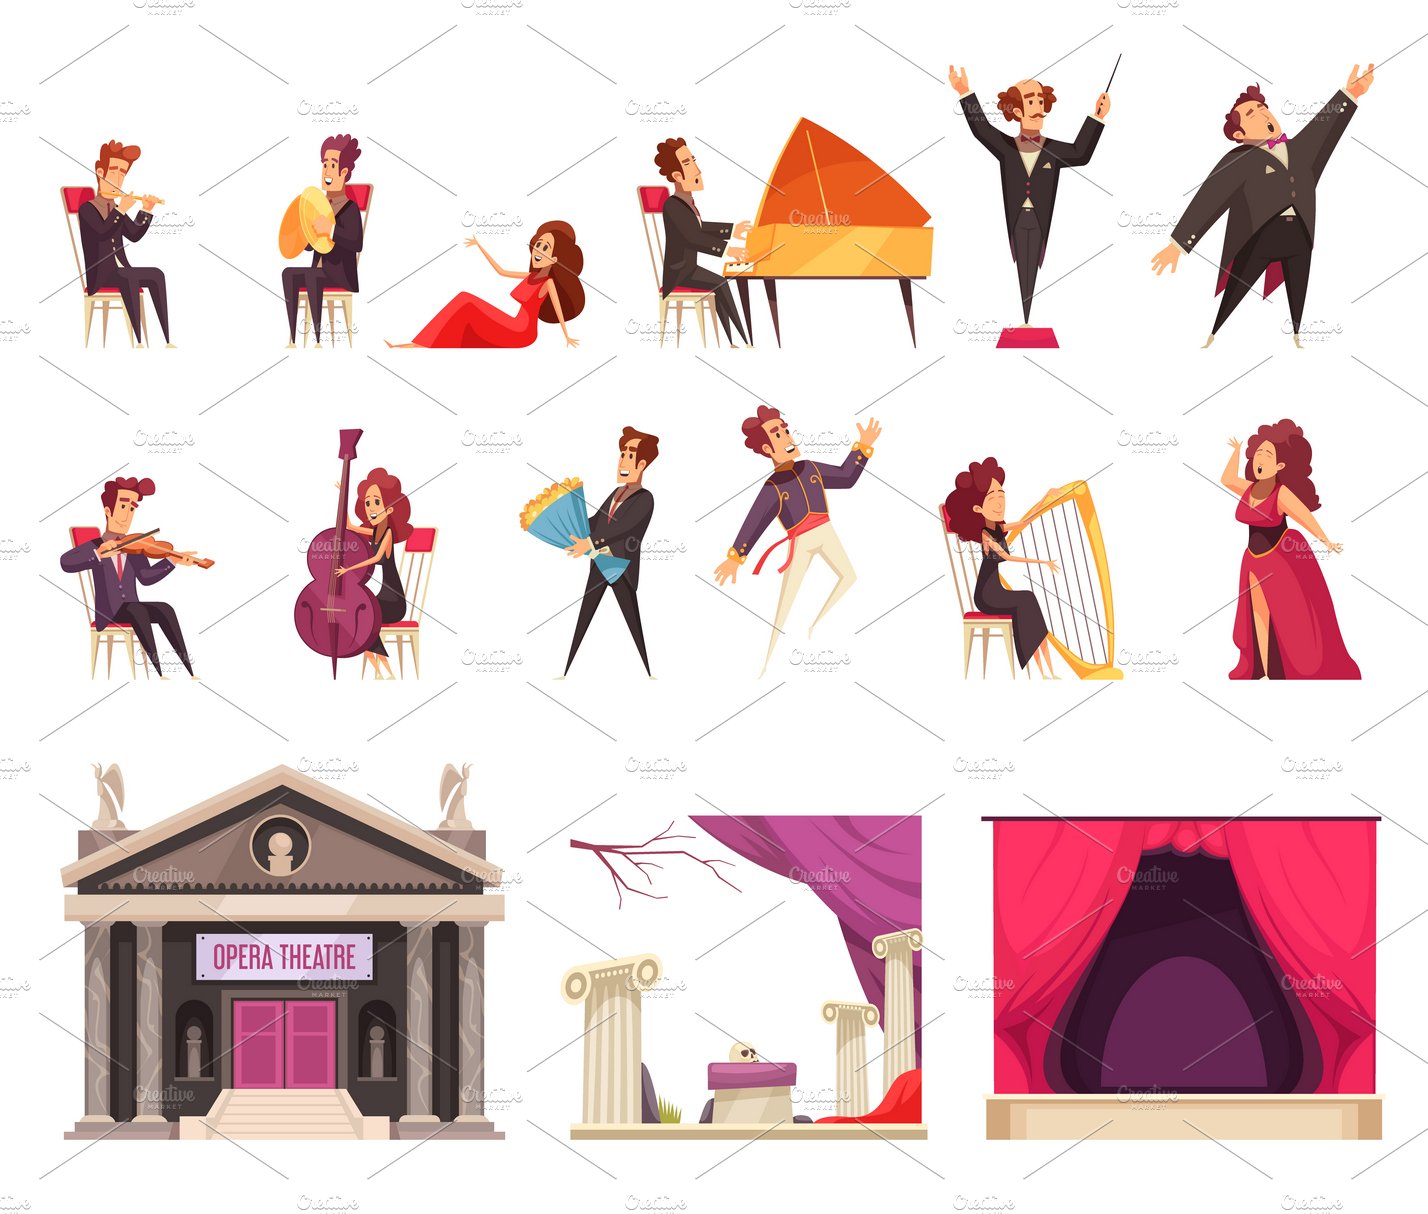 Opera theater cartoon elements set cover image.